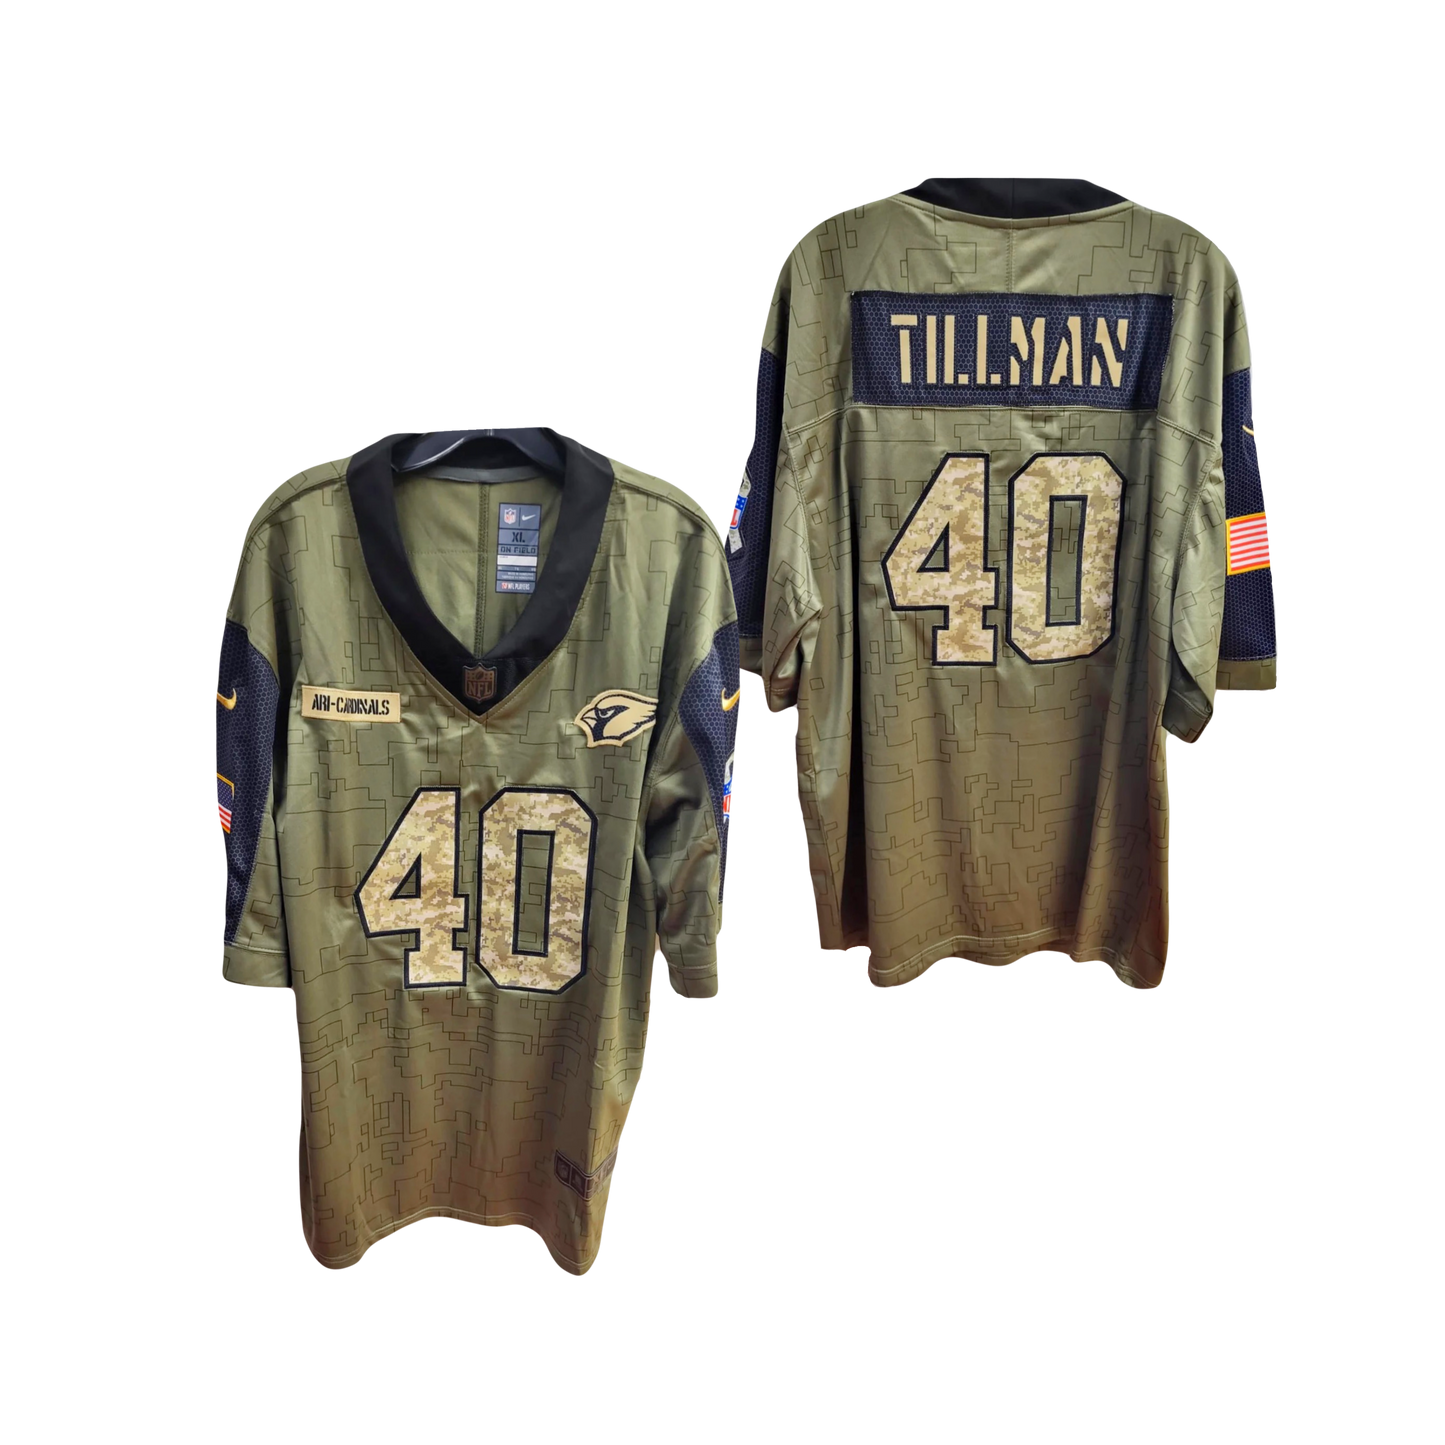 Pat Tillman ‘Salute to Service’ Army Veteran Legends Jersey